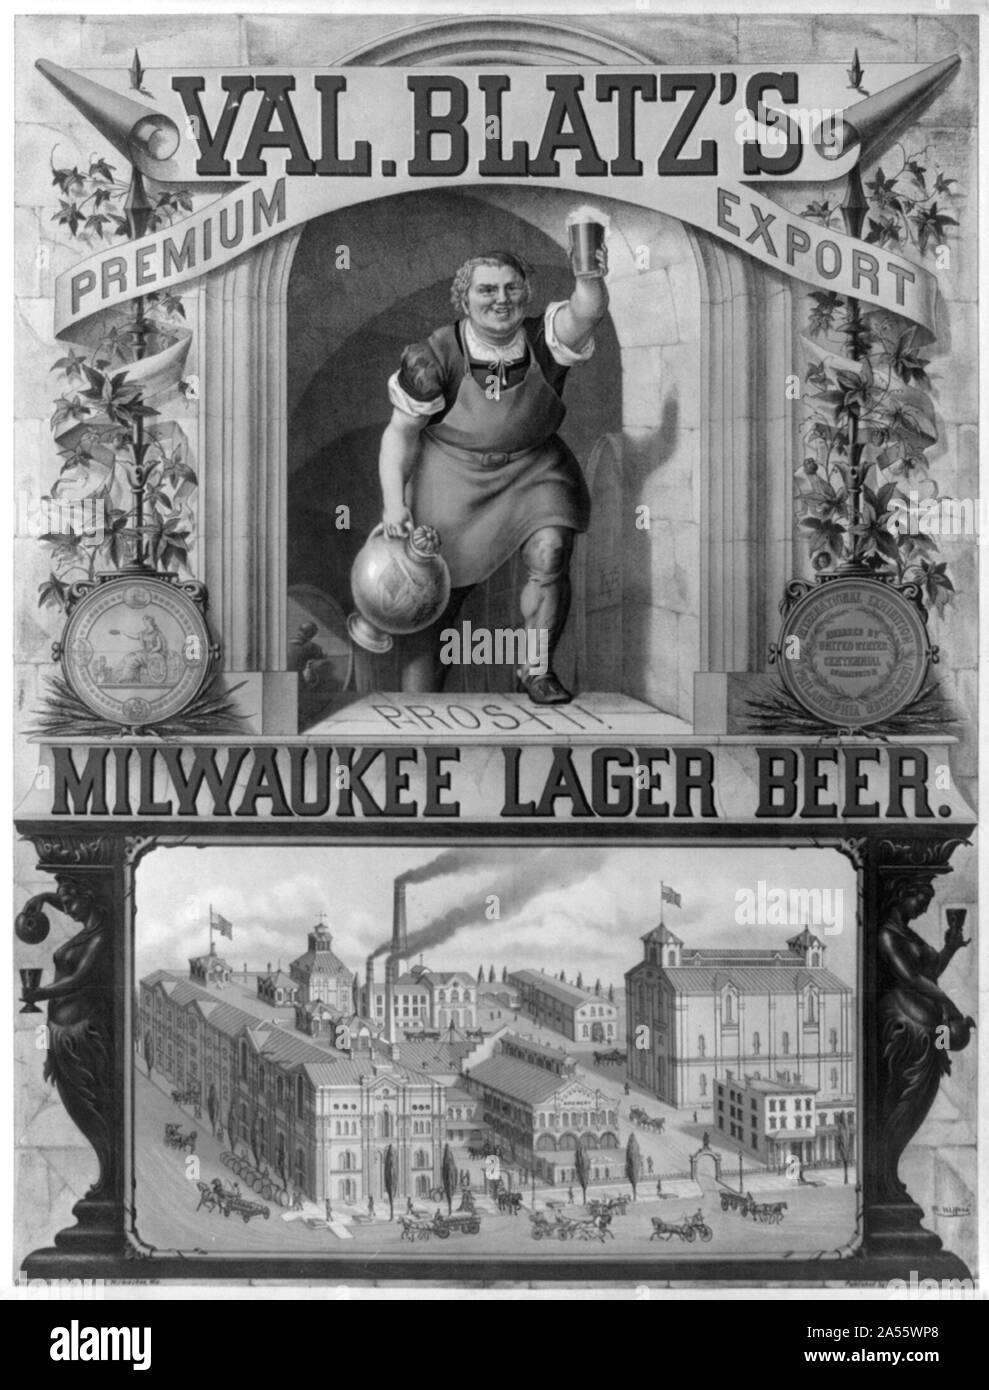 Val. Blatz premium per esportazione, Milwaukee birra lager / M. Ulffers. Foto Stock